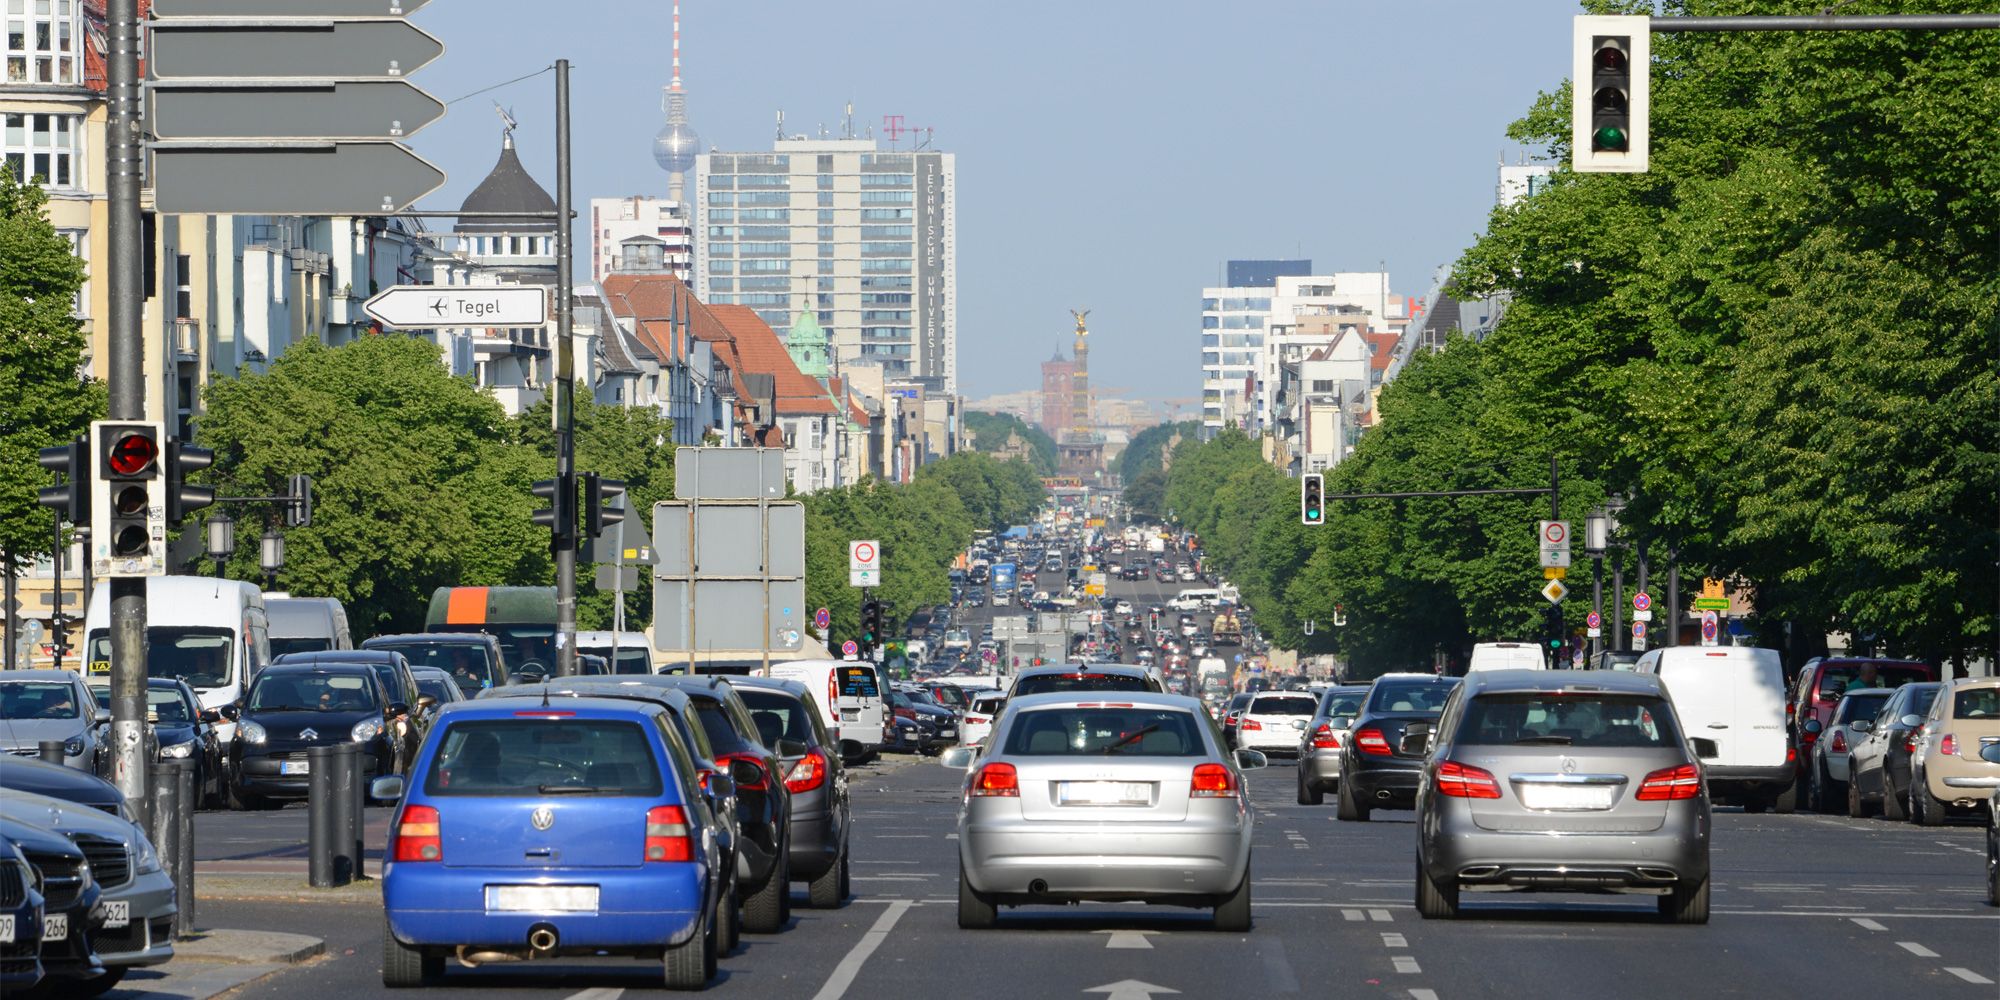 Kaiserdamm - Autoverkehr in Berlin, 2018